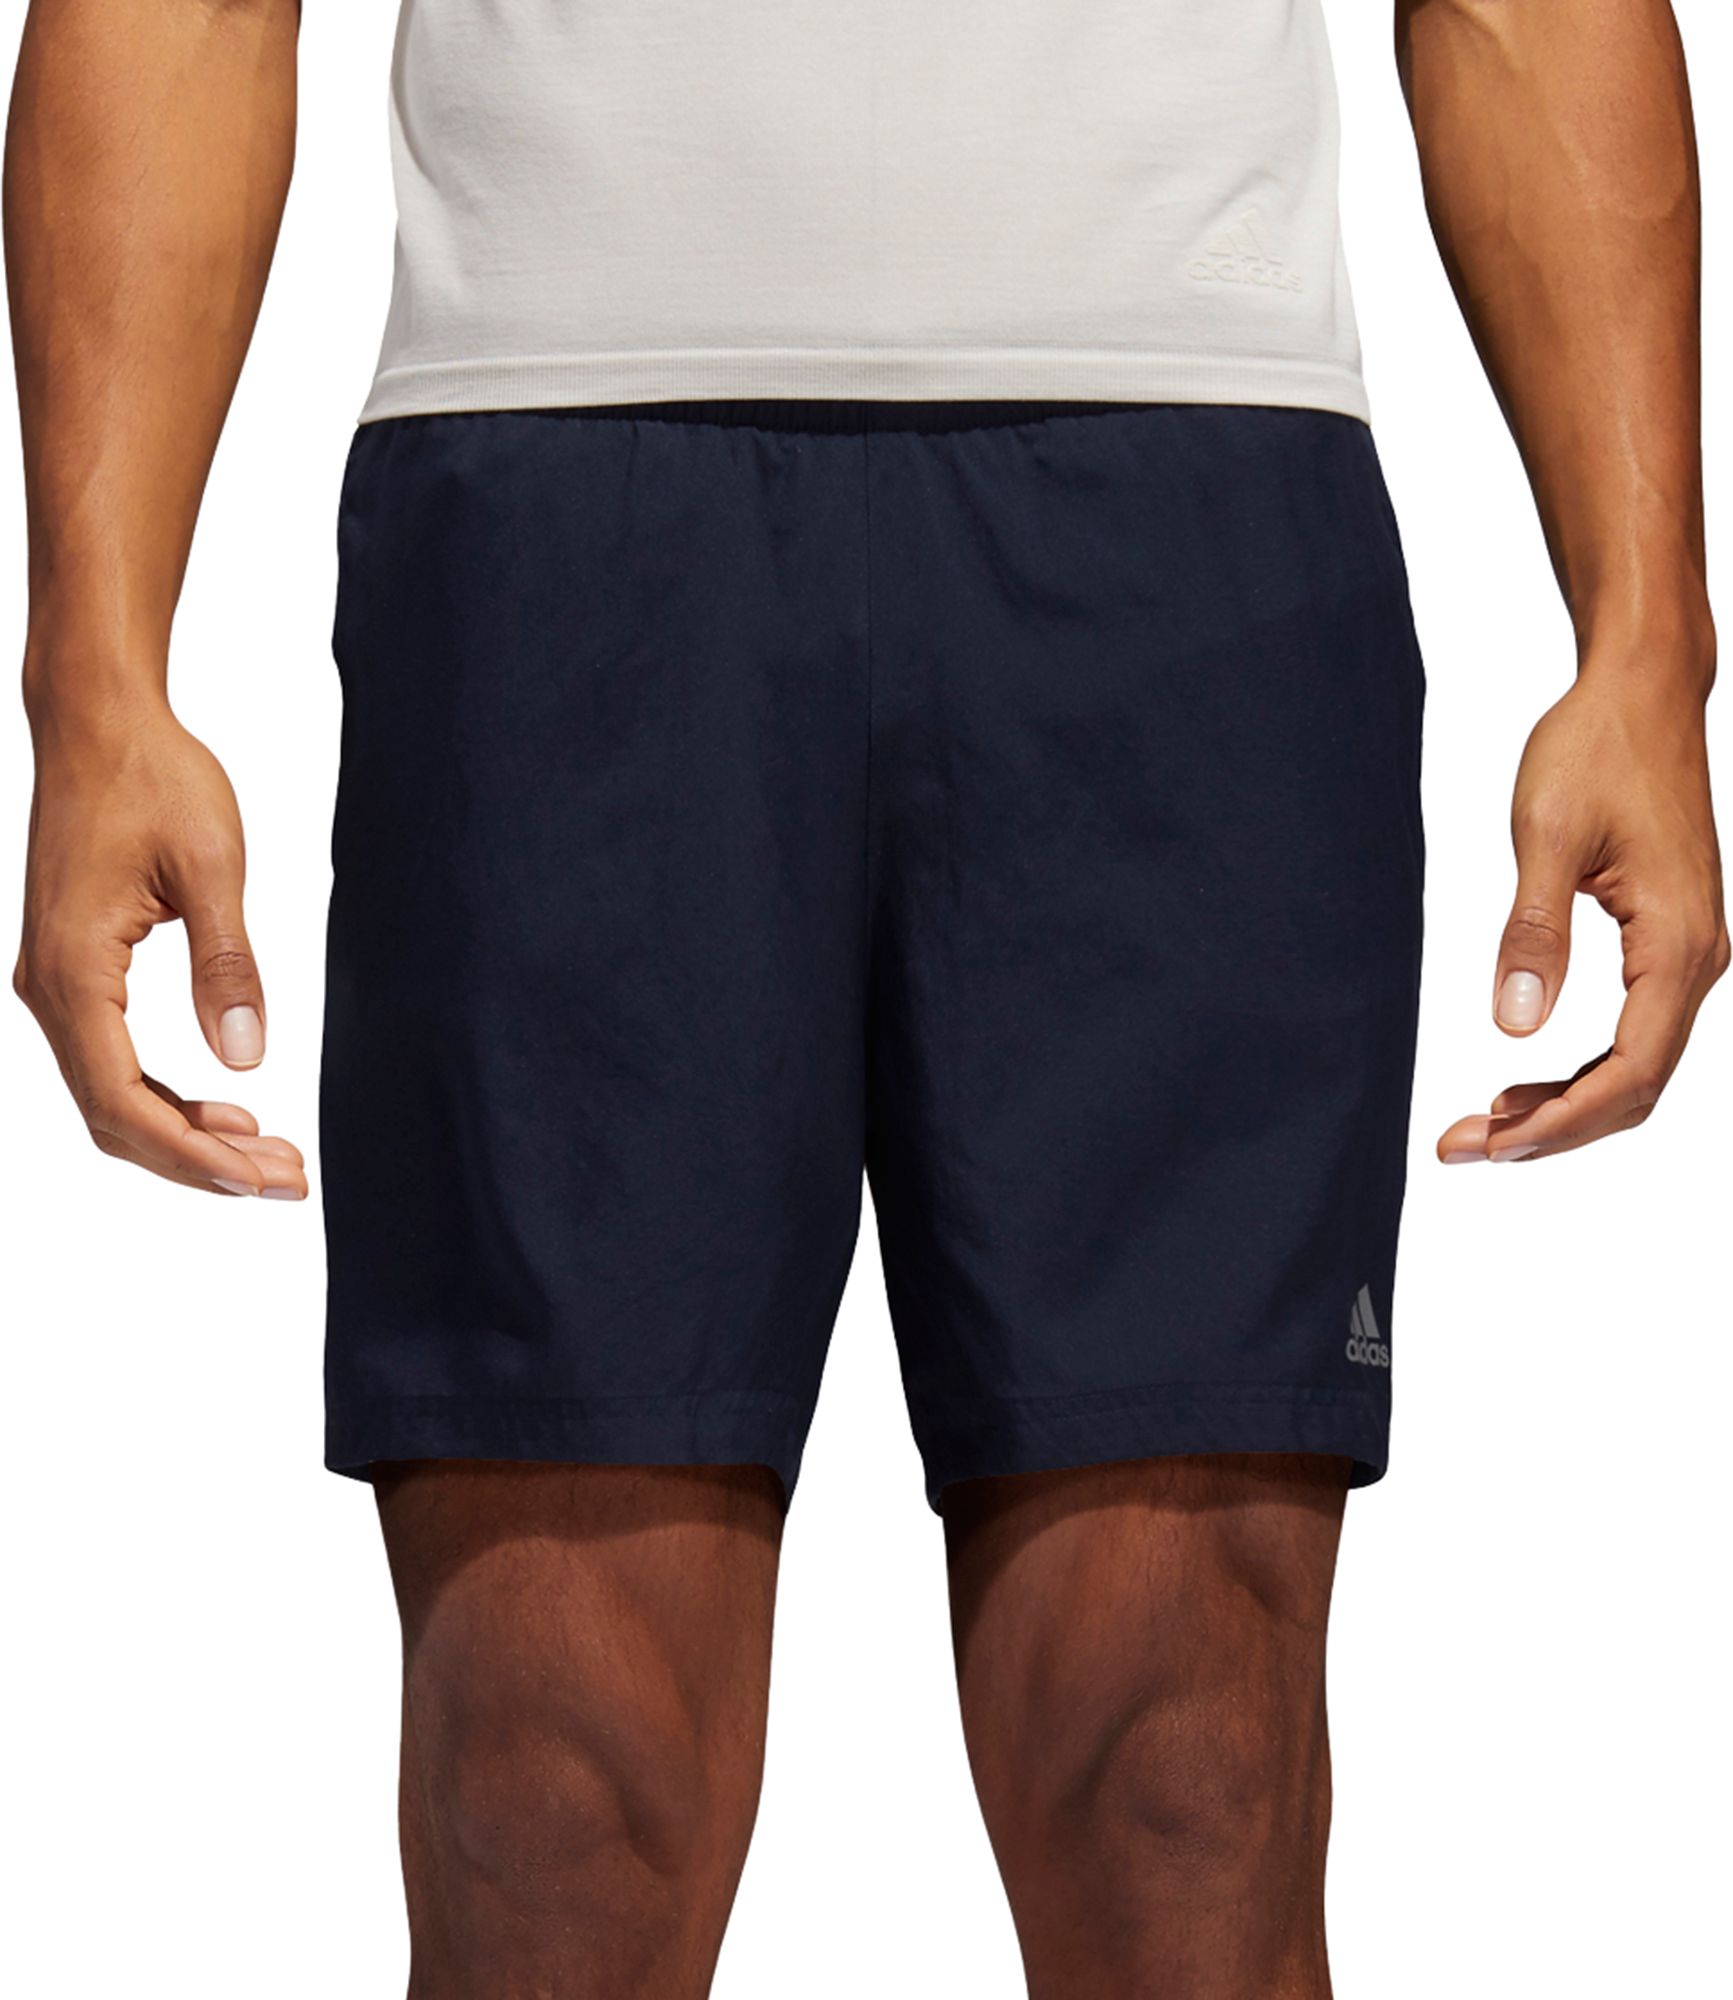 adidas running shorts with liner